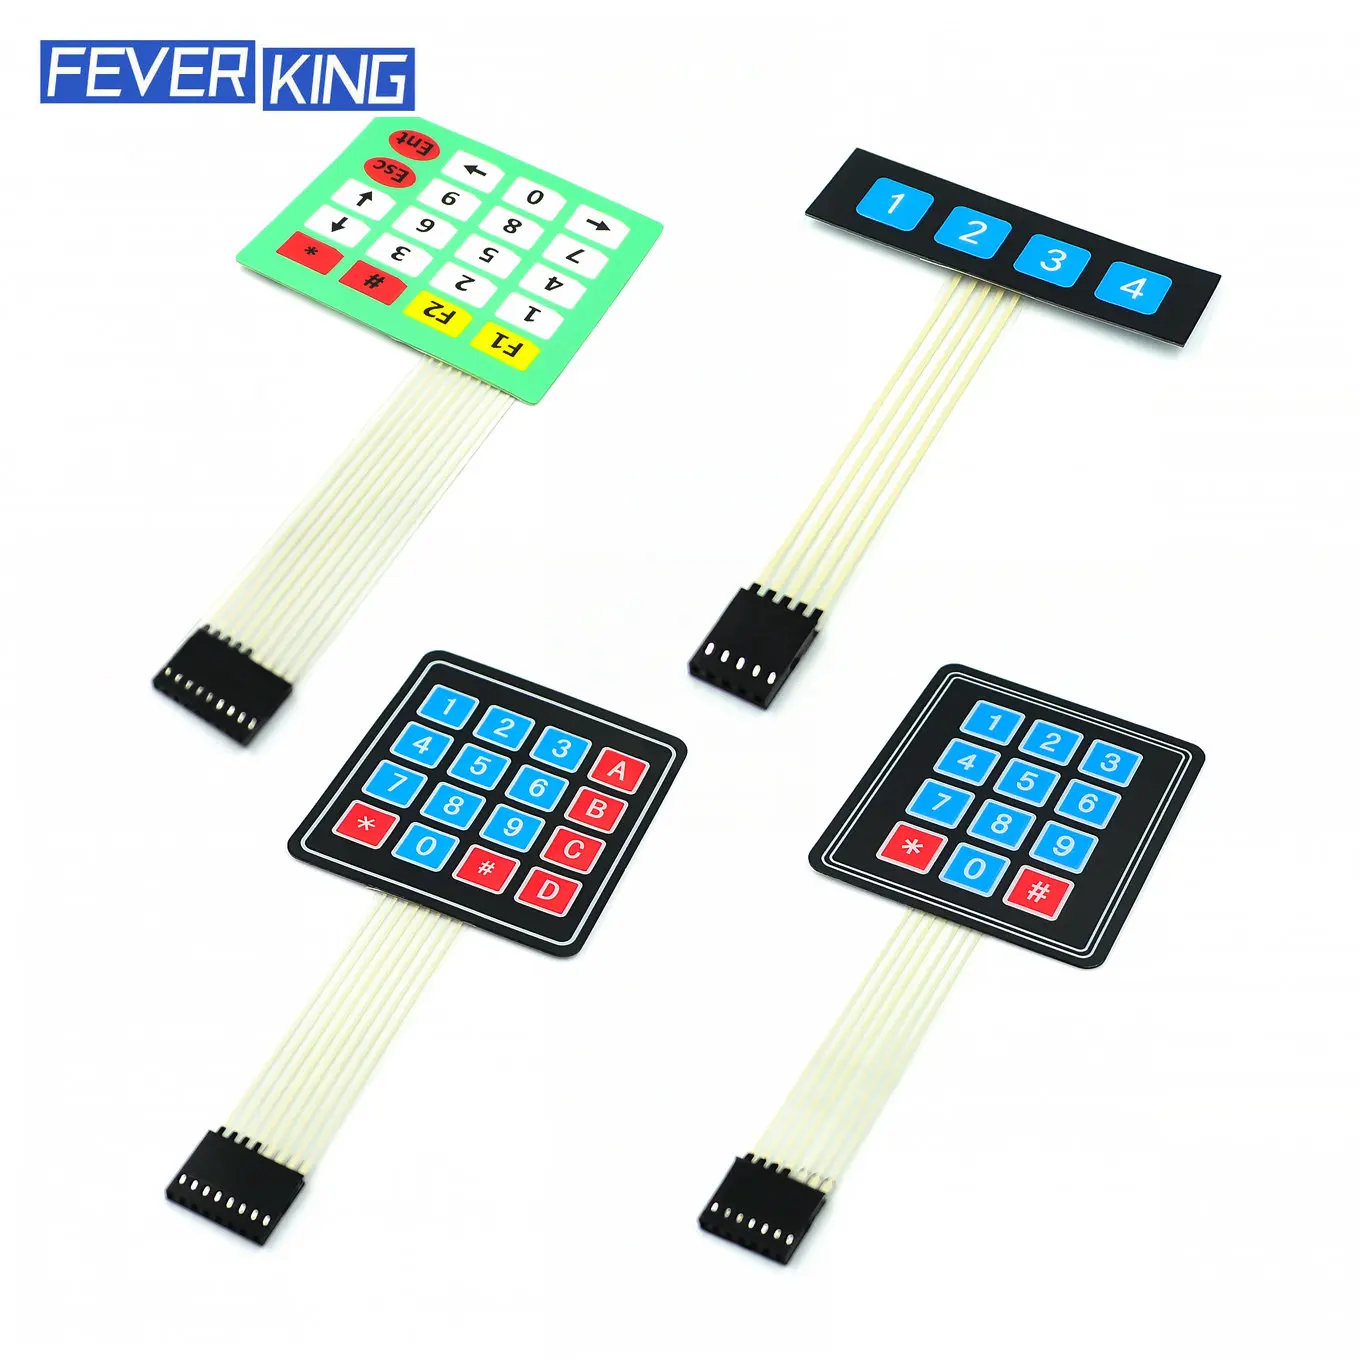 

3*4 4X5 Matrix Array Keyboard 1*2 3 4 5 Key Button Membrane Switch 1X6 Keypad with LED Control Panel Pad DIY Kit for Arduino